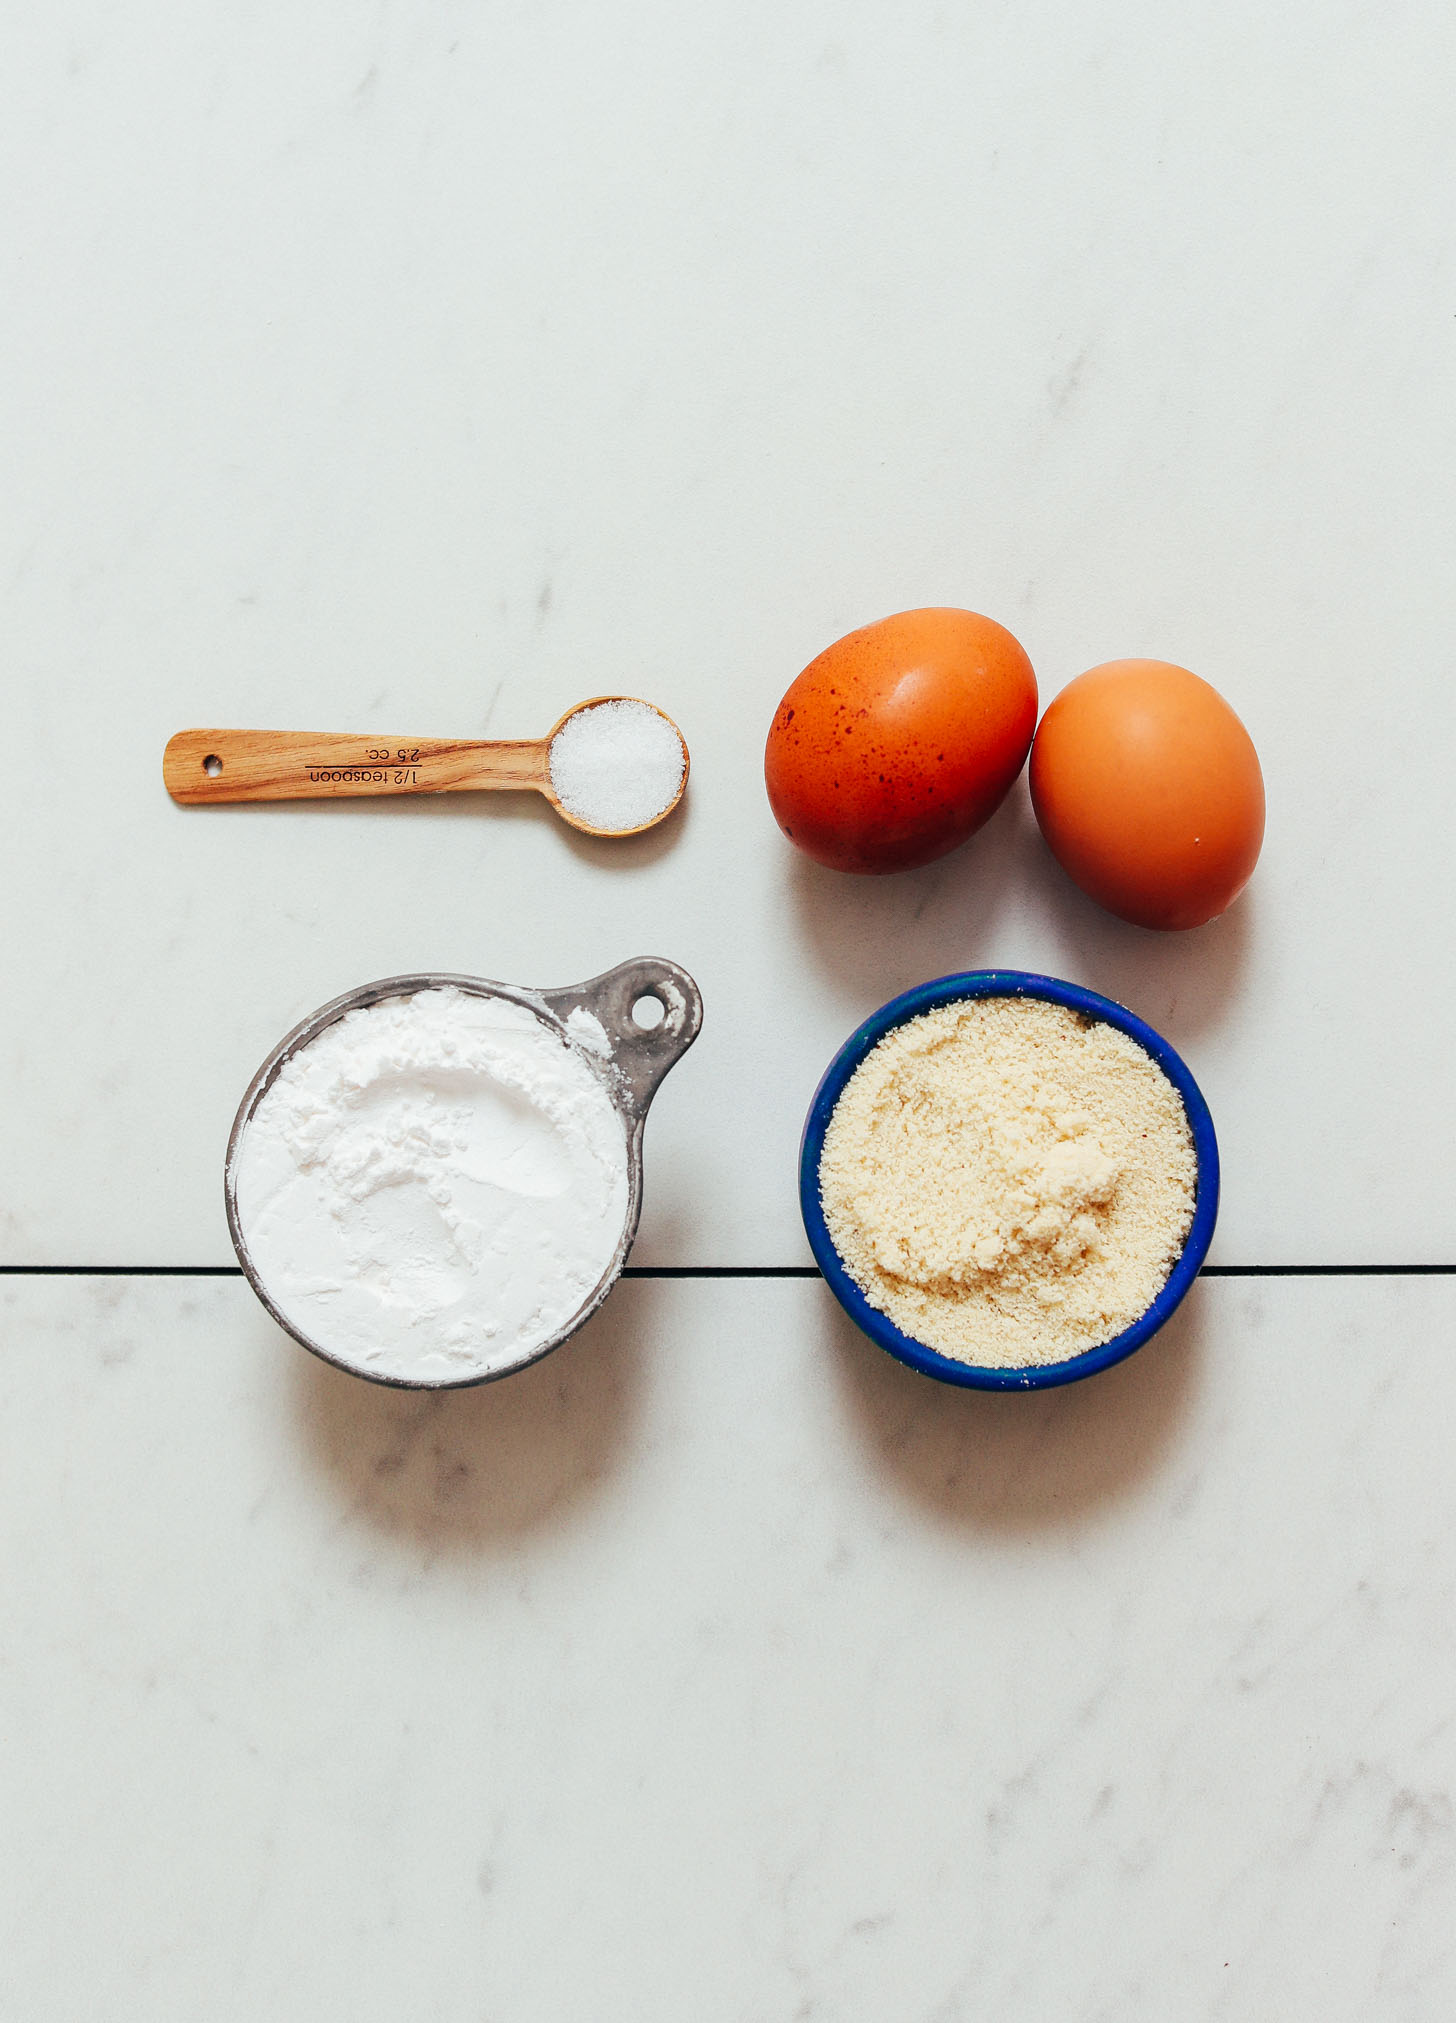 Almond flour, tapioca starch, sea salt, and eggs for making homemade Gluten Free Pasta